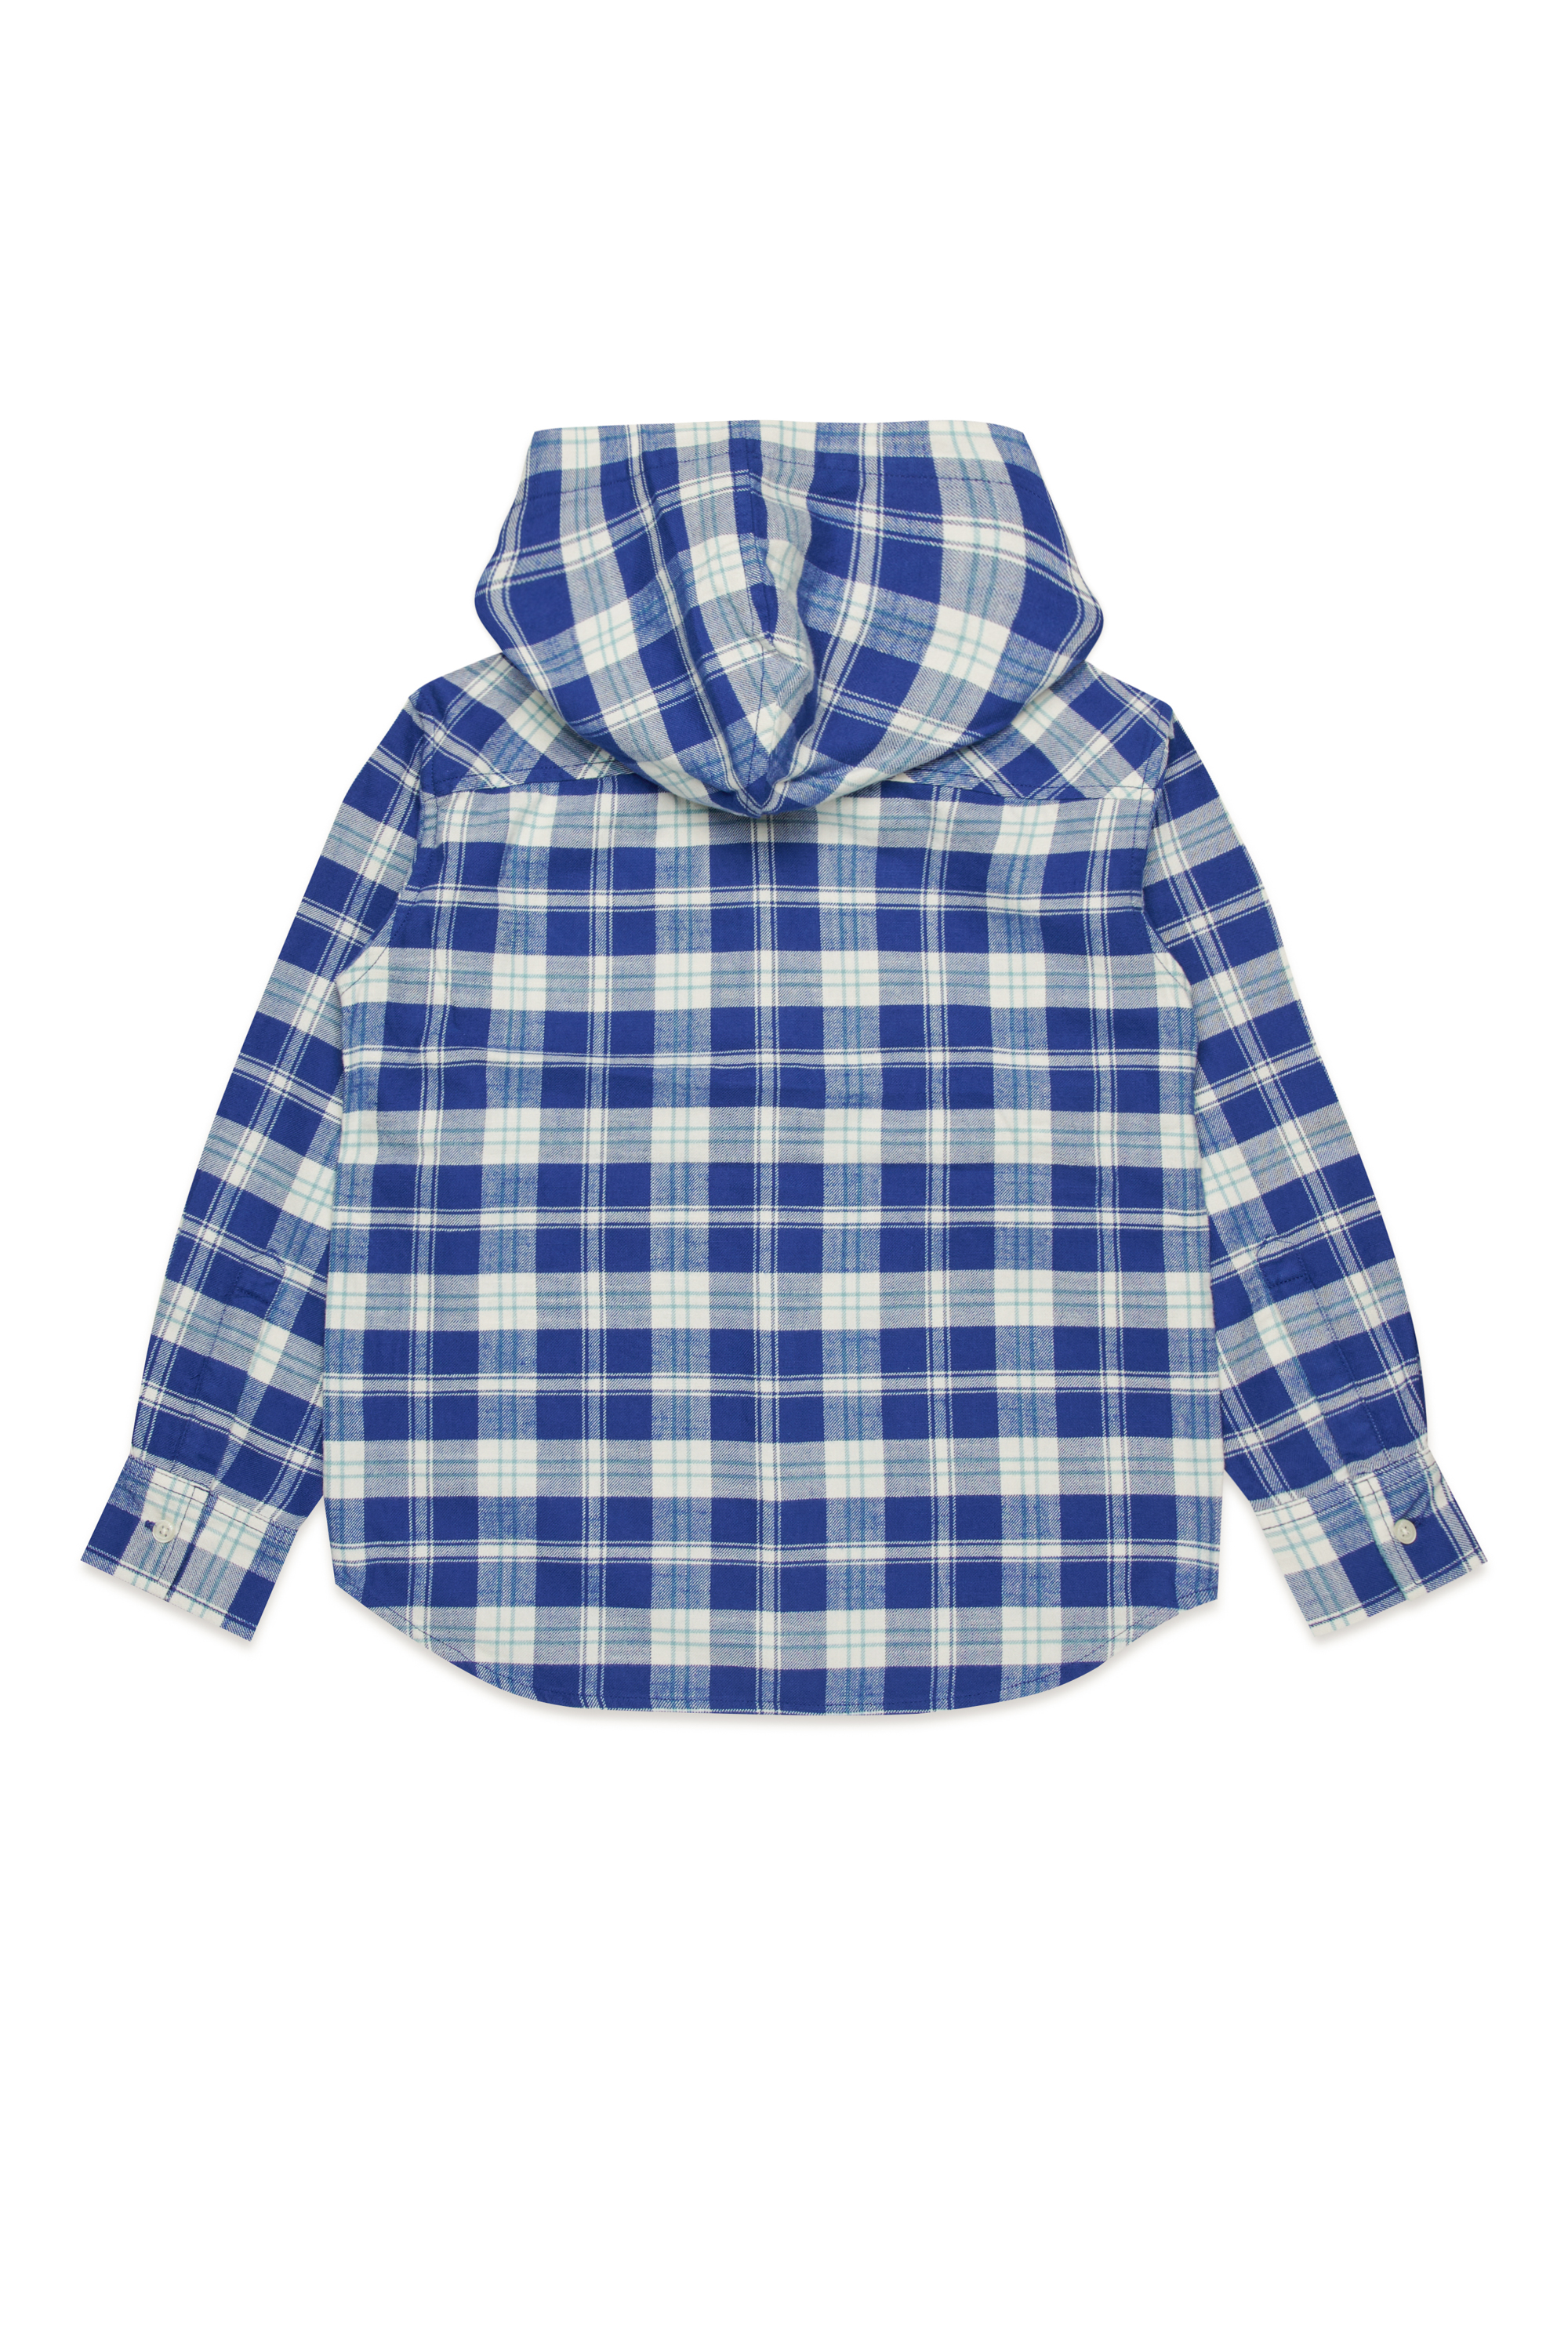 Diesel - CSDEWNYHOOD OVER, Uomo Hooded shirt in check flannel in Multicolor - Image 2